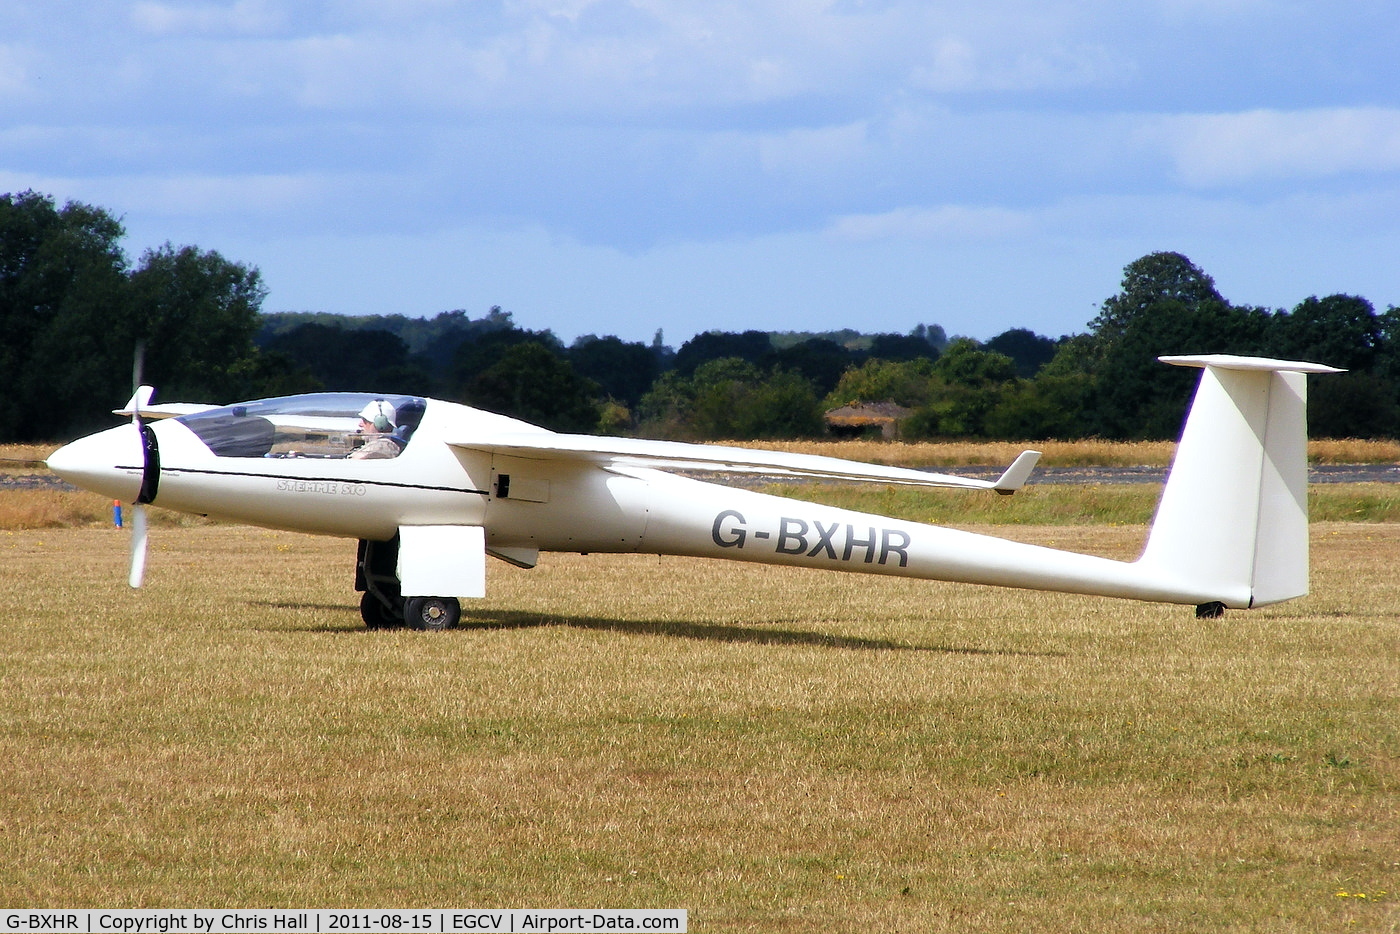 G-BXHR, 1997 Stemme S-10V C/N 14-030, powered glider at Sleap